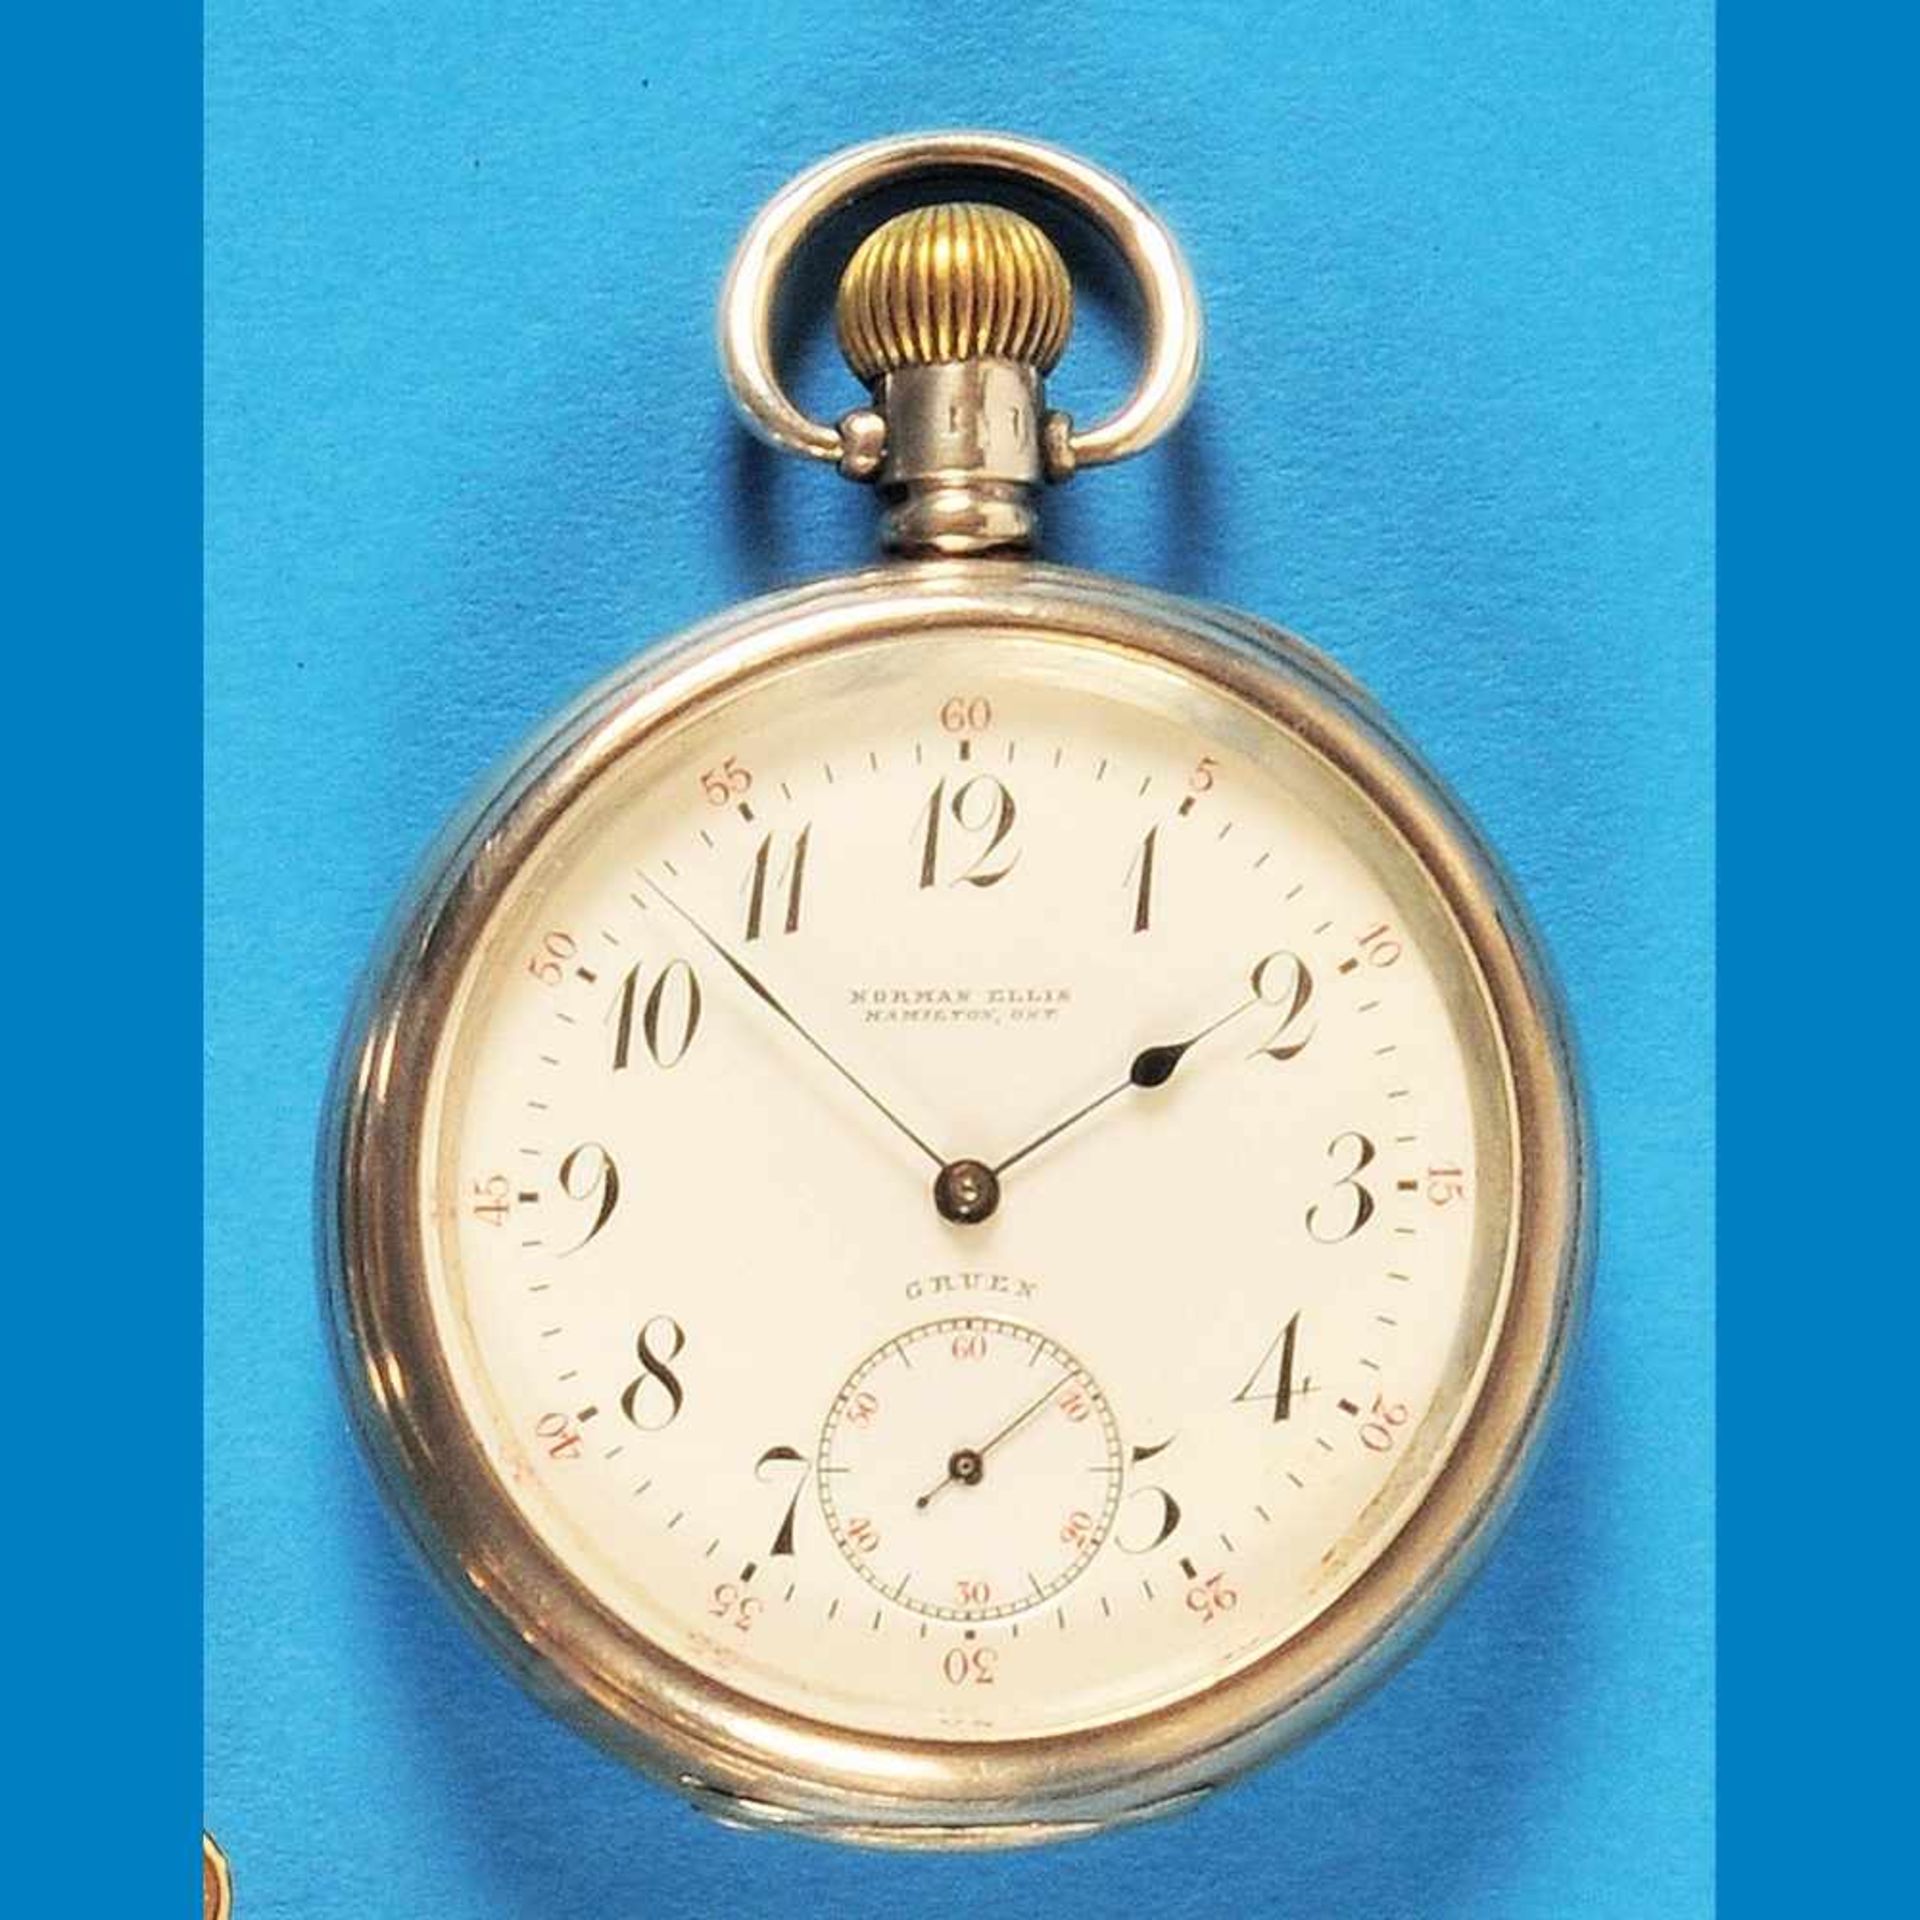 American silver pocket watch, D & S. Gruen, D. & Sons, Cincinatti, Ohio, USA, 1890-98 - Image 2 of 2